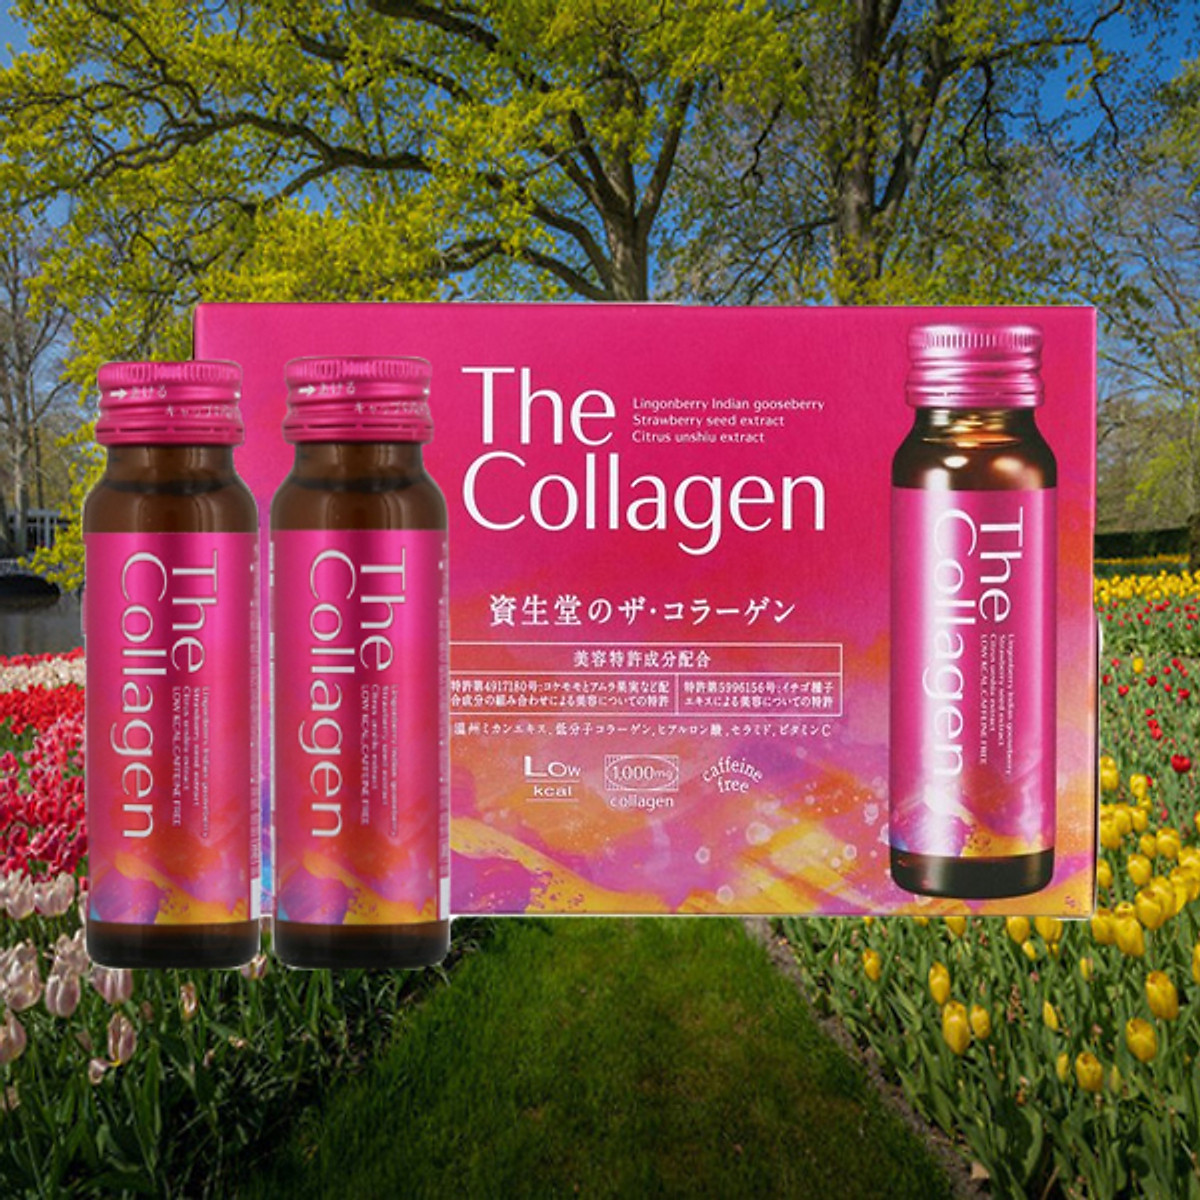 Nước Uống Nhật Bản Collagen Hộp 10 Chai The Collagen